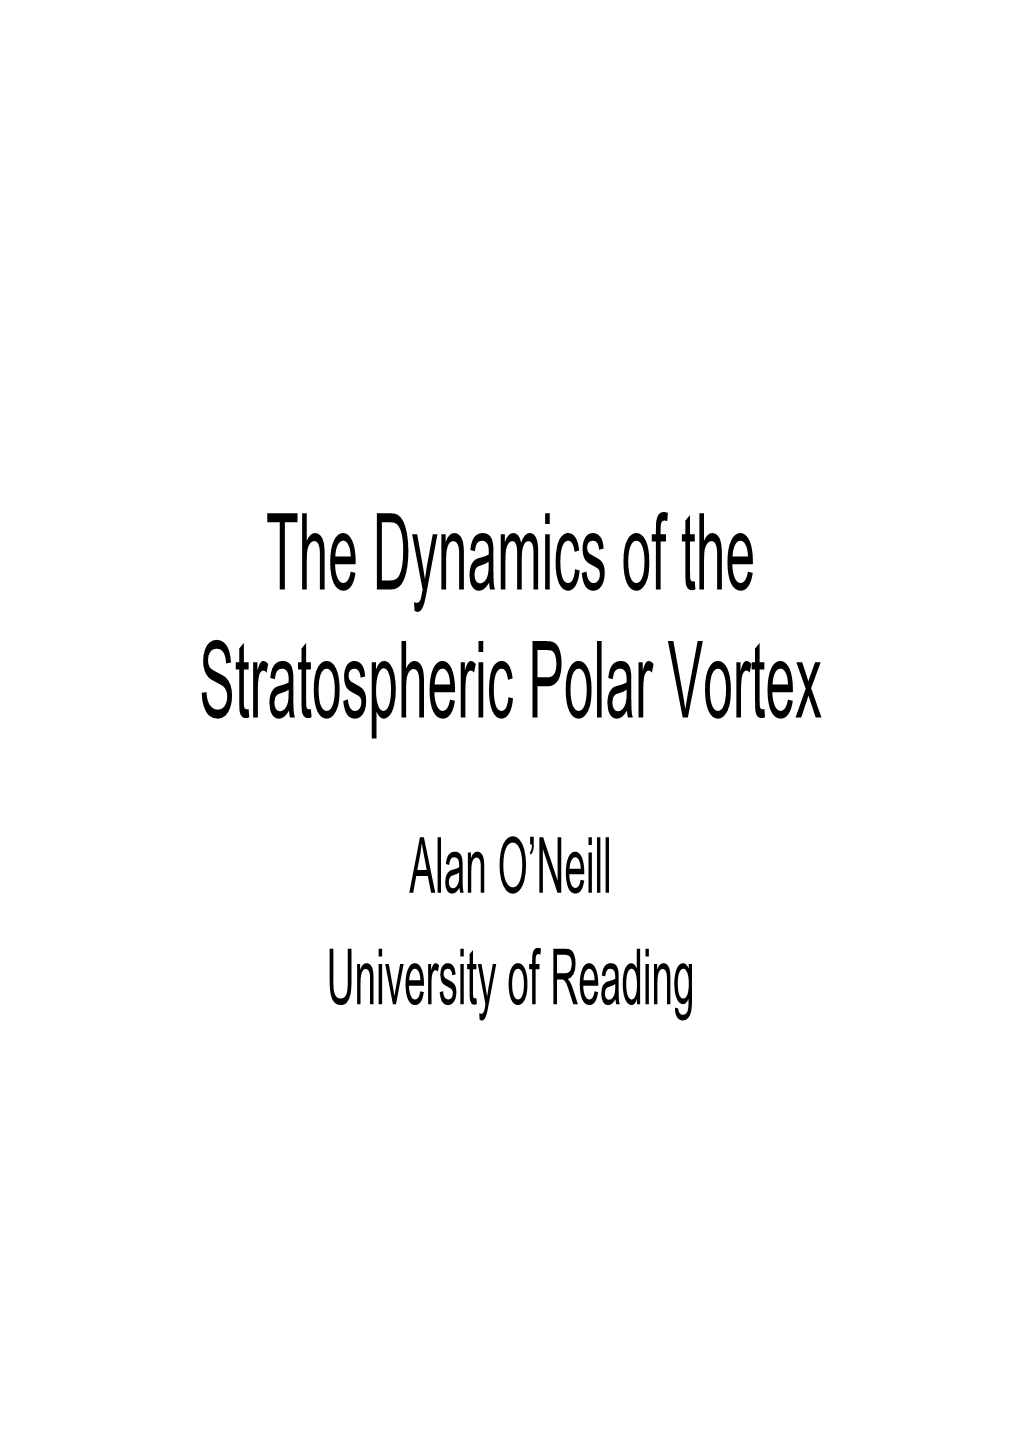 The Dynamics of the Stratospheric Polar Vortex